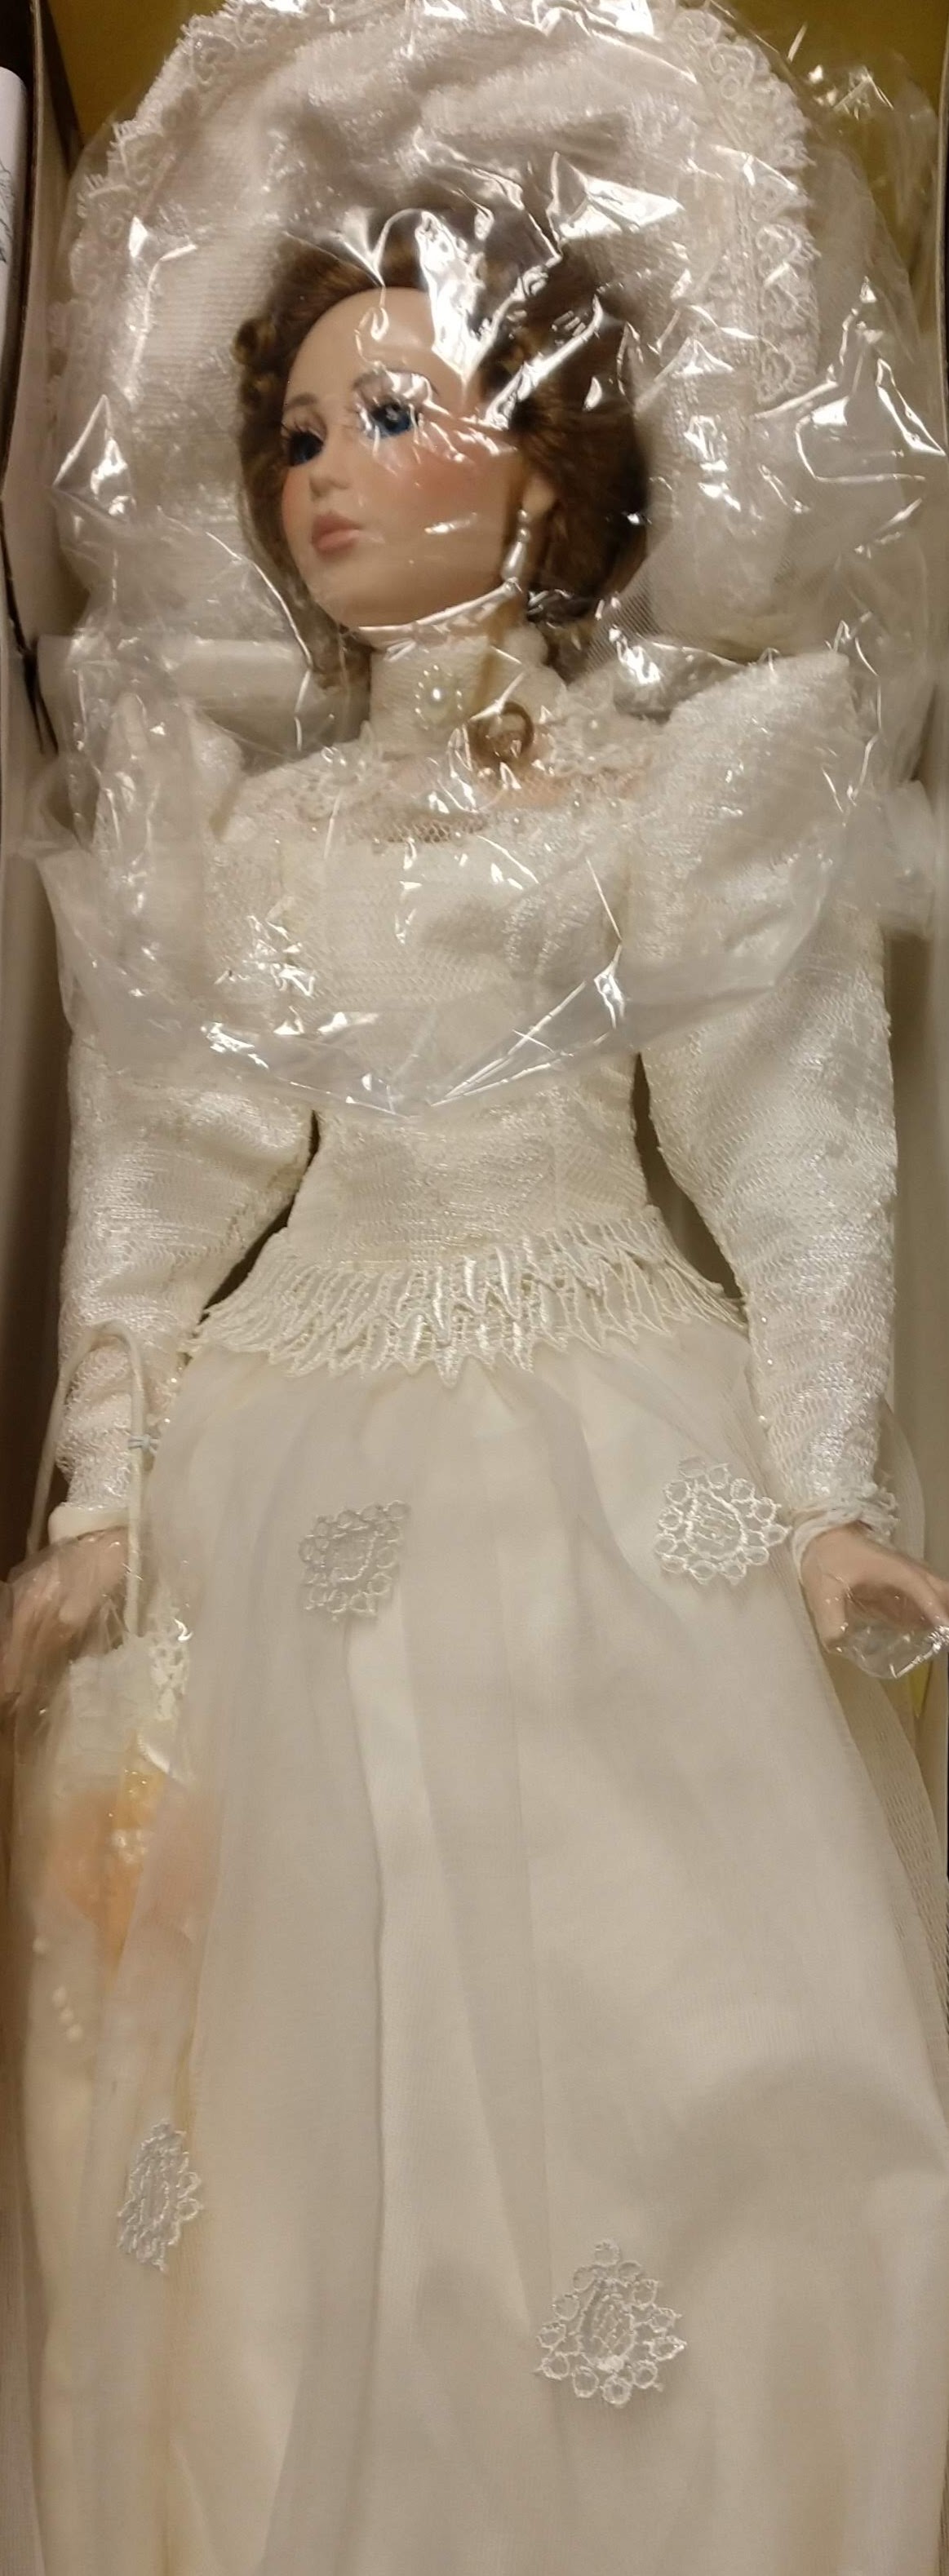 Seymour Mann Porcelain Doll.jpg